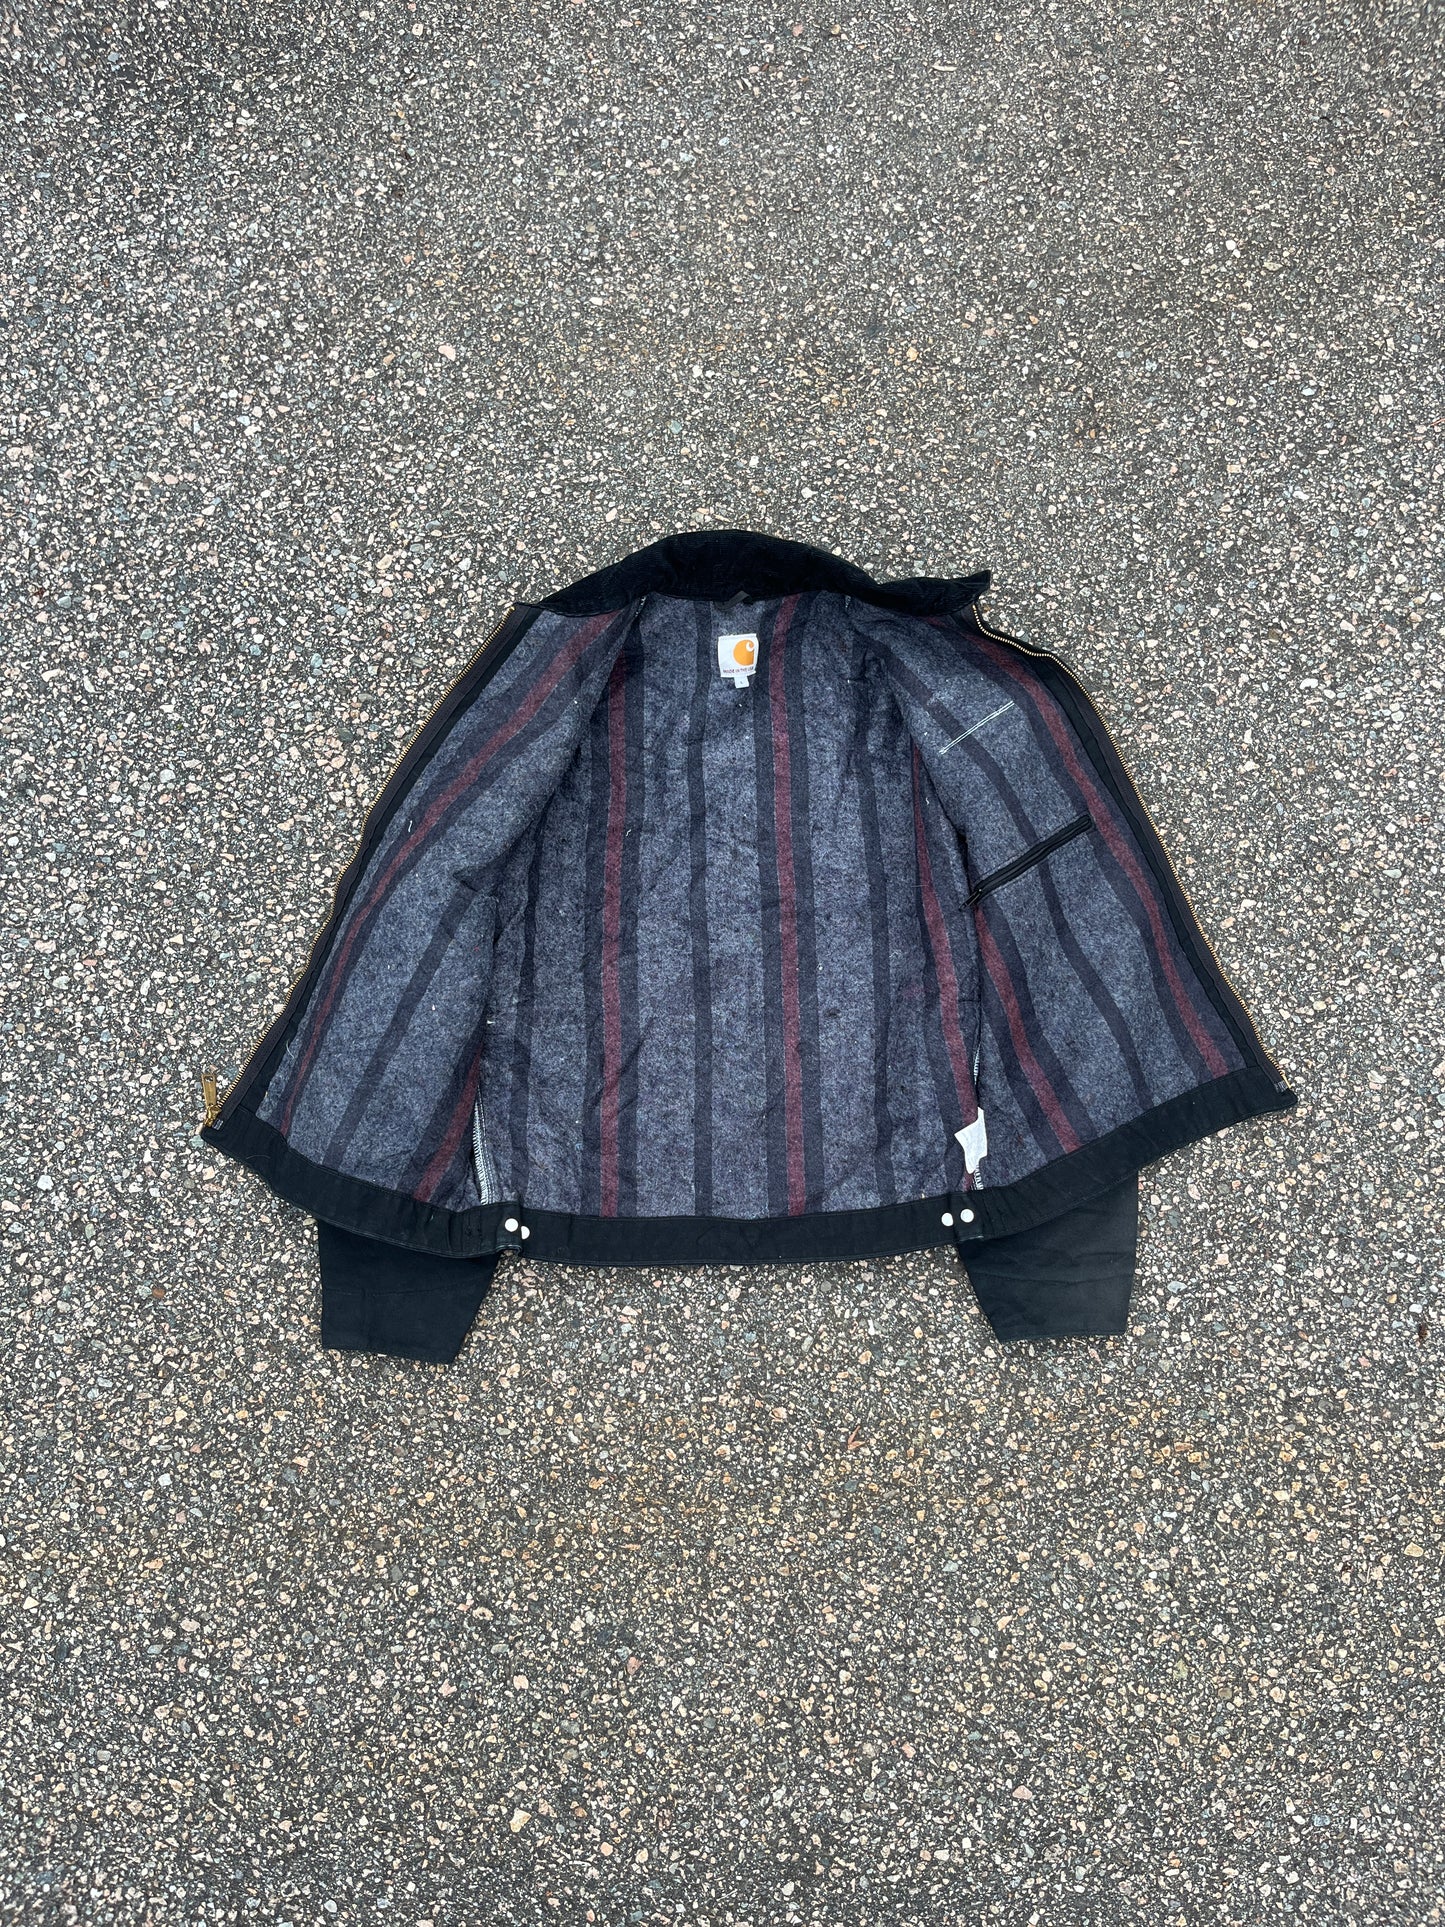 Faded Black Carhartt Detroit Jacket - Large